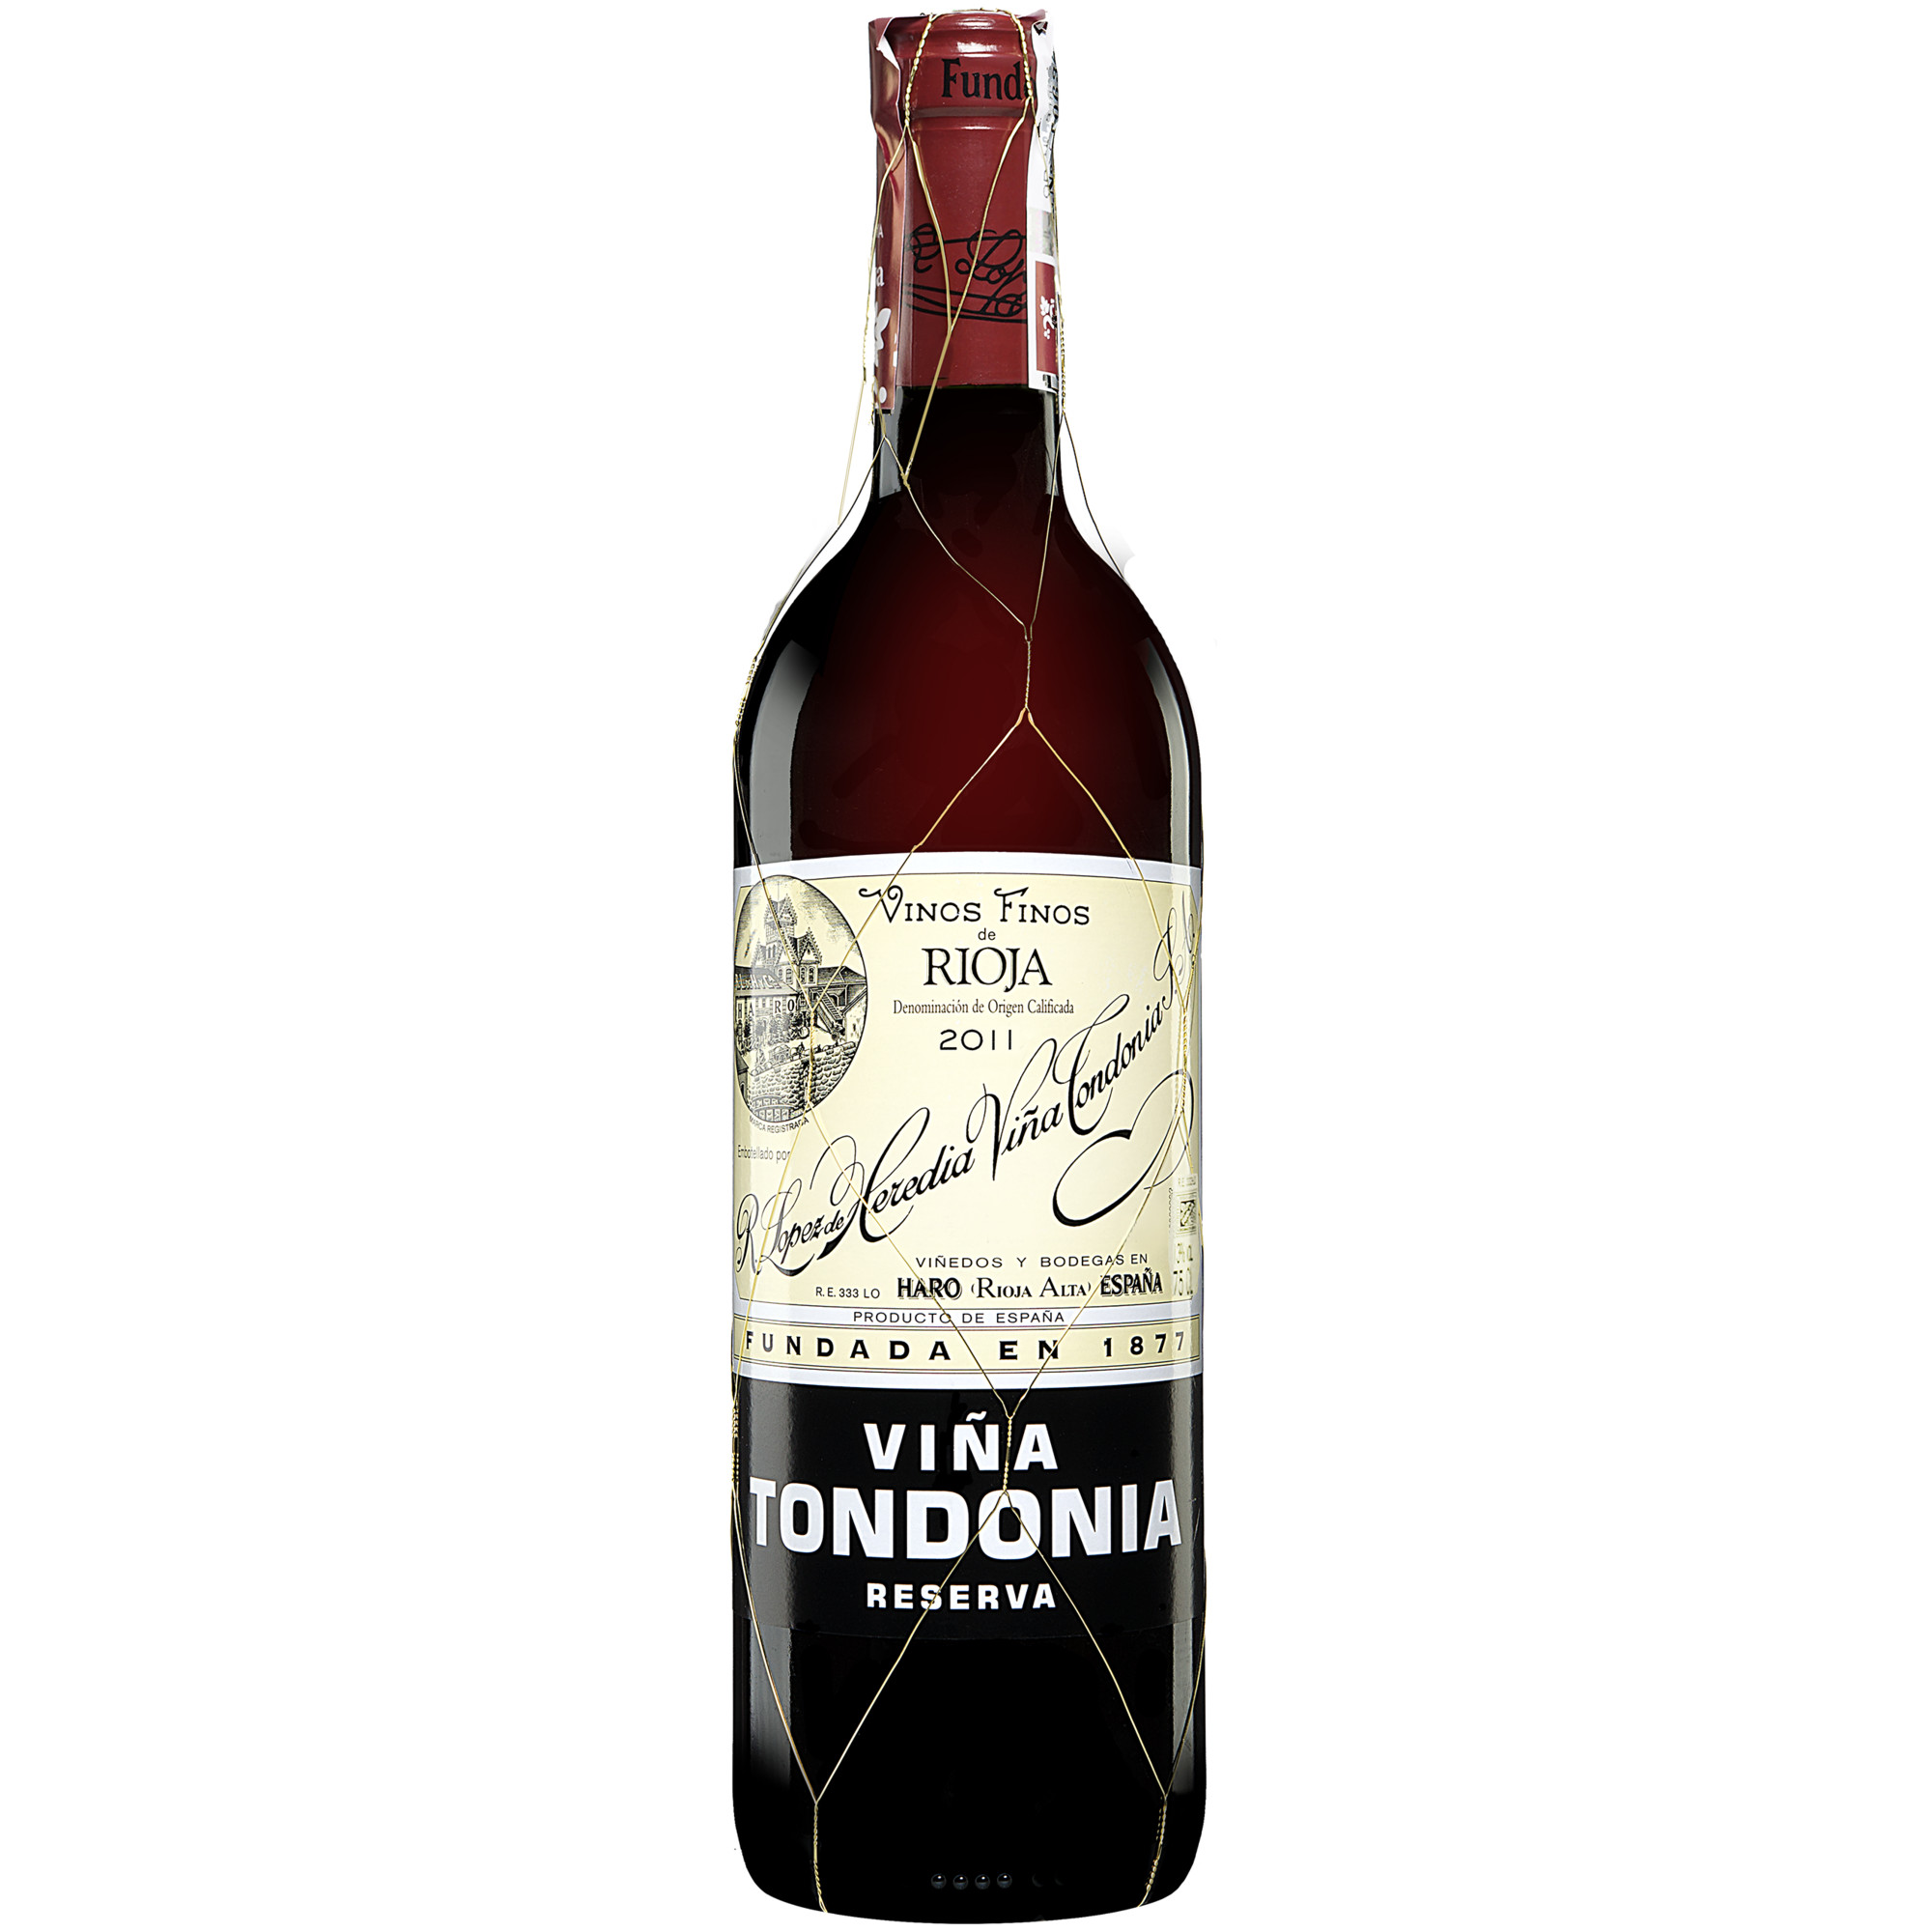 Tondonia »Viña Tondonia« Tinto Reserva 2011  0.75L 13% Vol. Rotwein Trocken aus Spanien Rotwein 35893 vinos DE